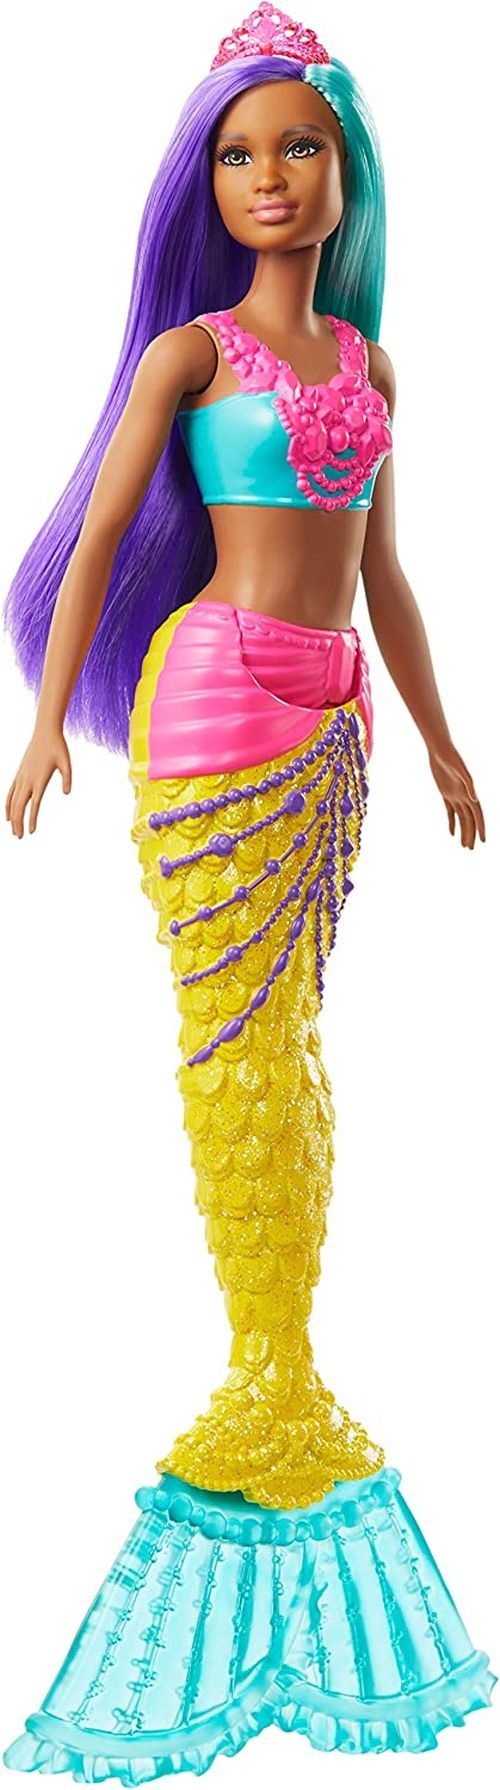 MATTEL Dreamtopia Black Mermaid Barbie Doll - 